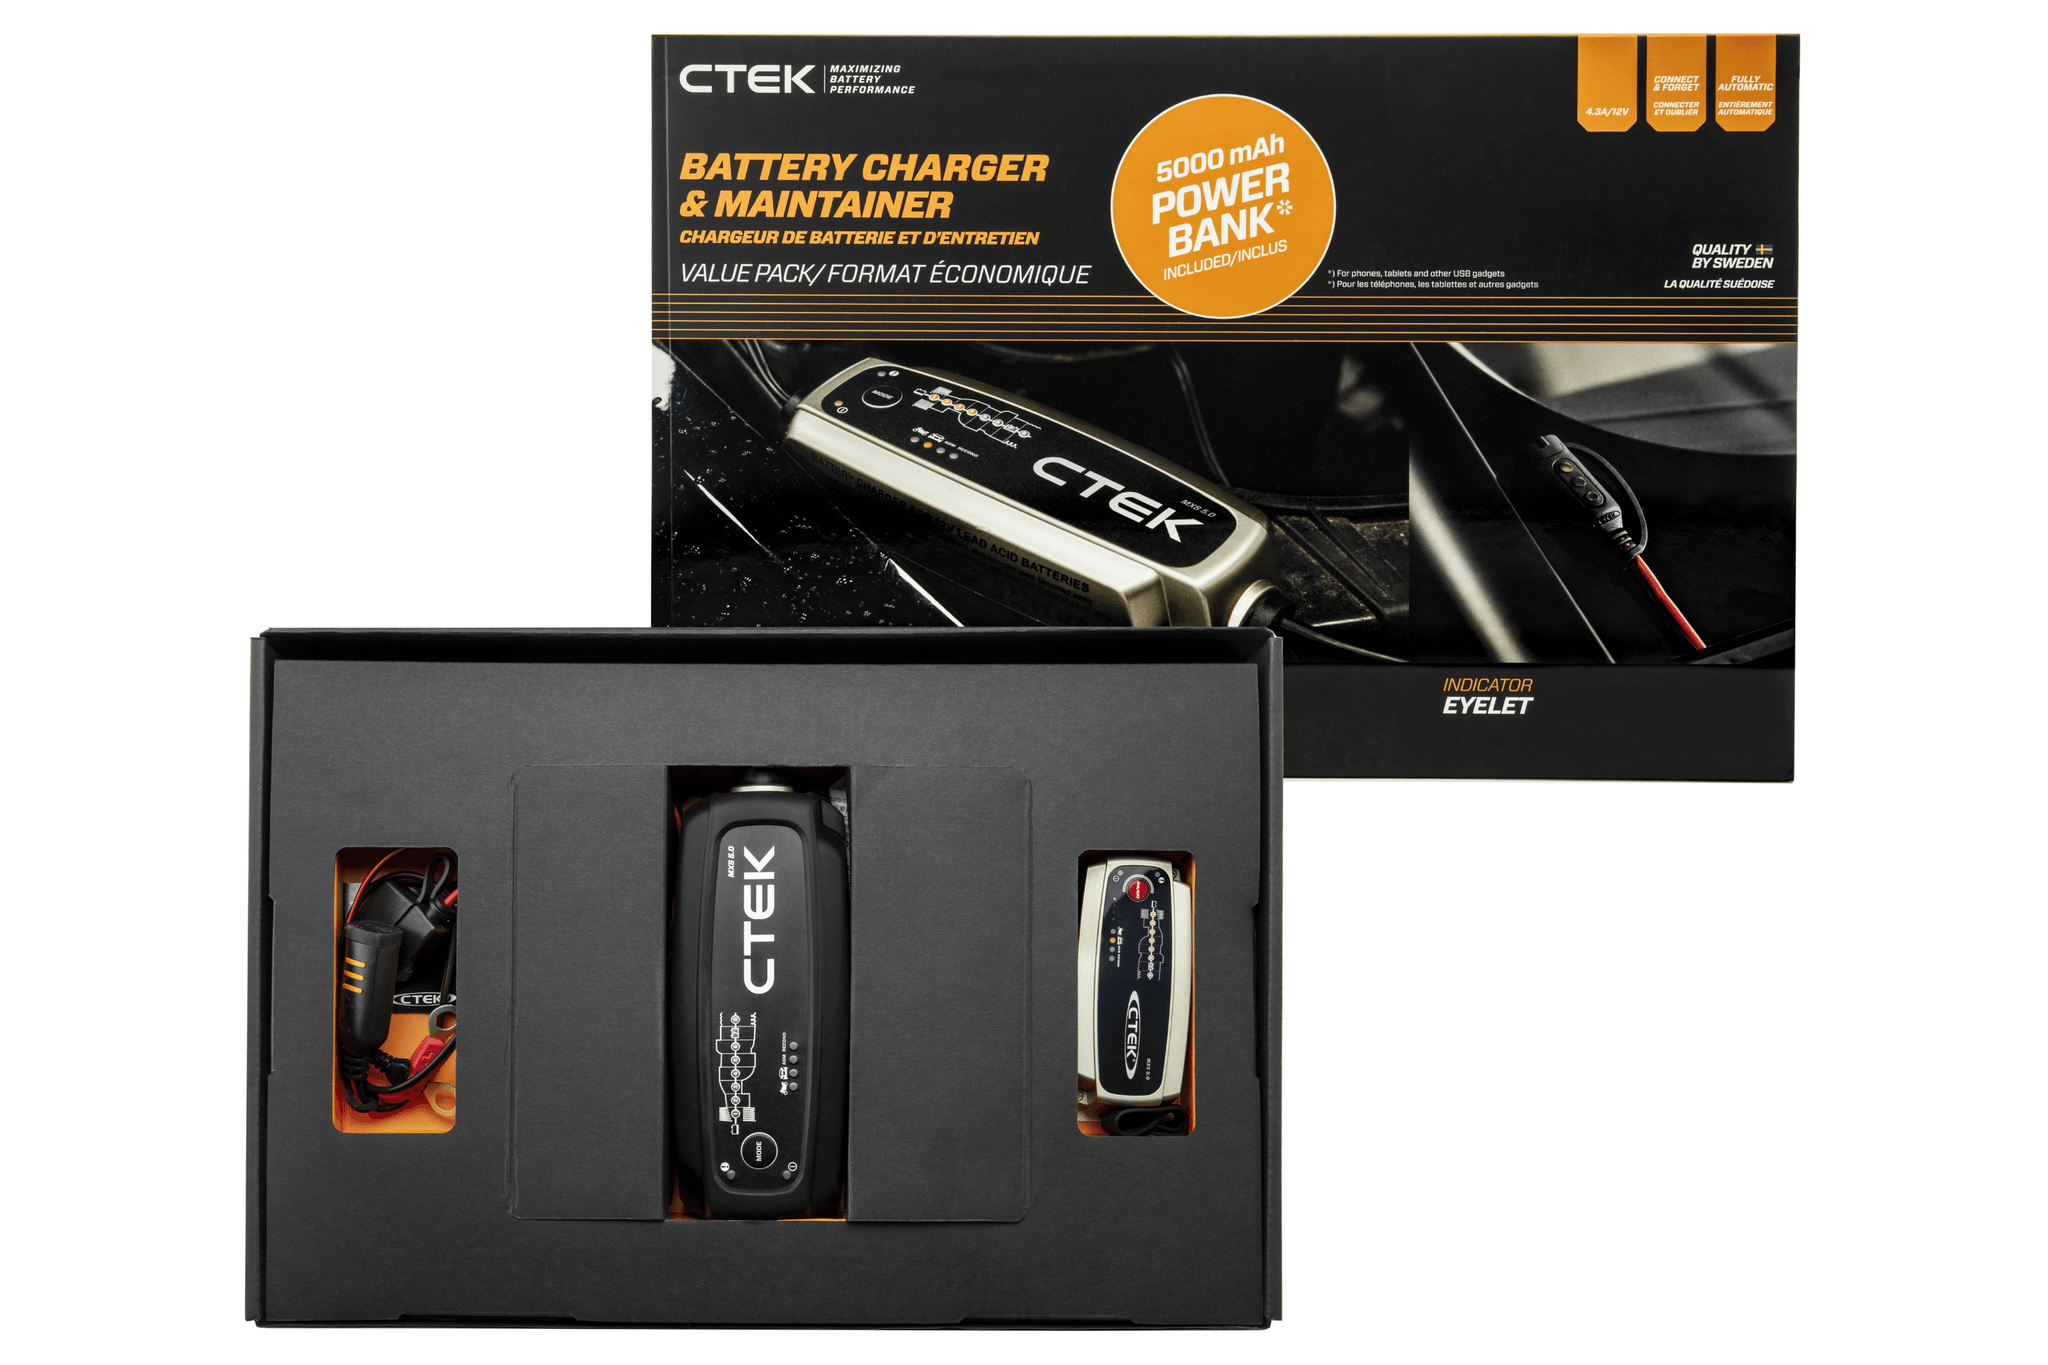 CTEK Battery Charger - MXS 5.0 4.3 Amp 12 Volt - 40-206